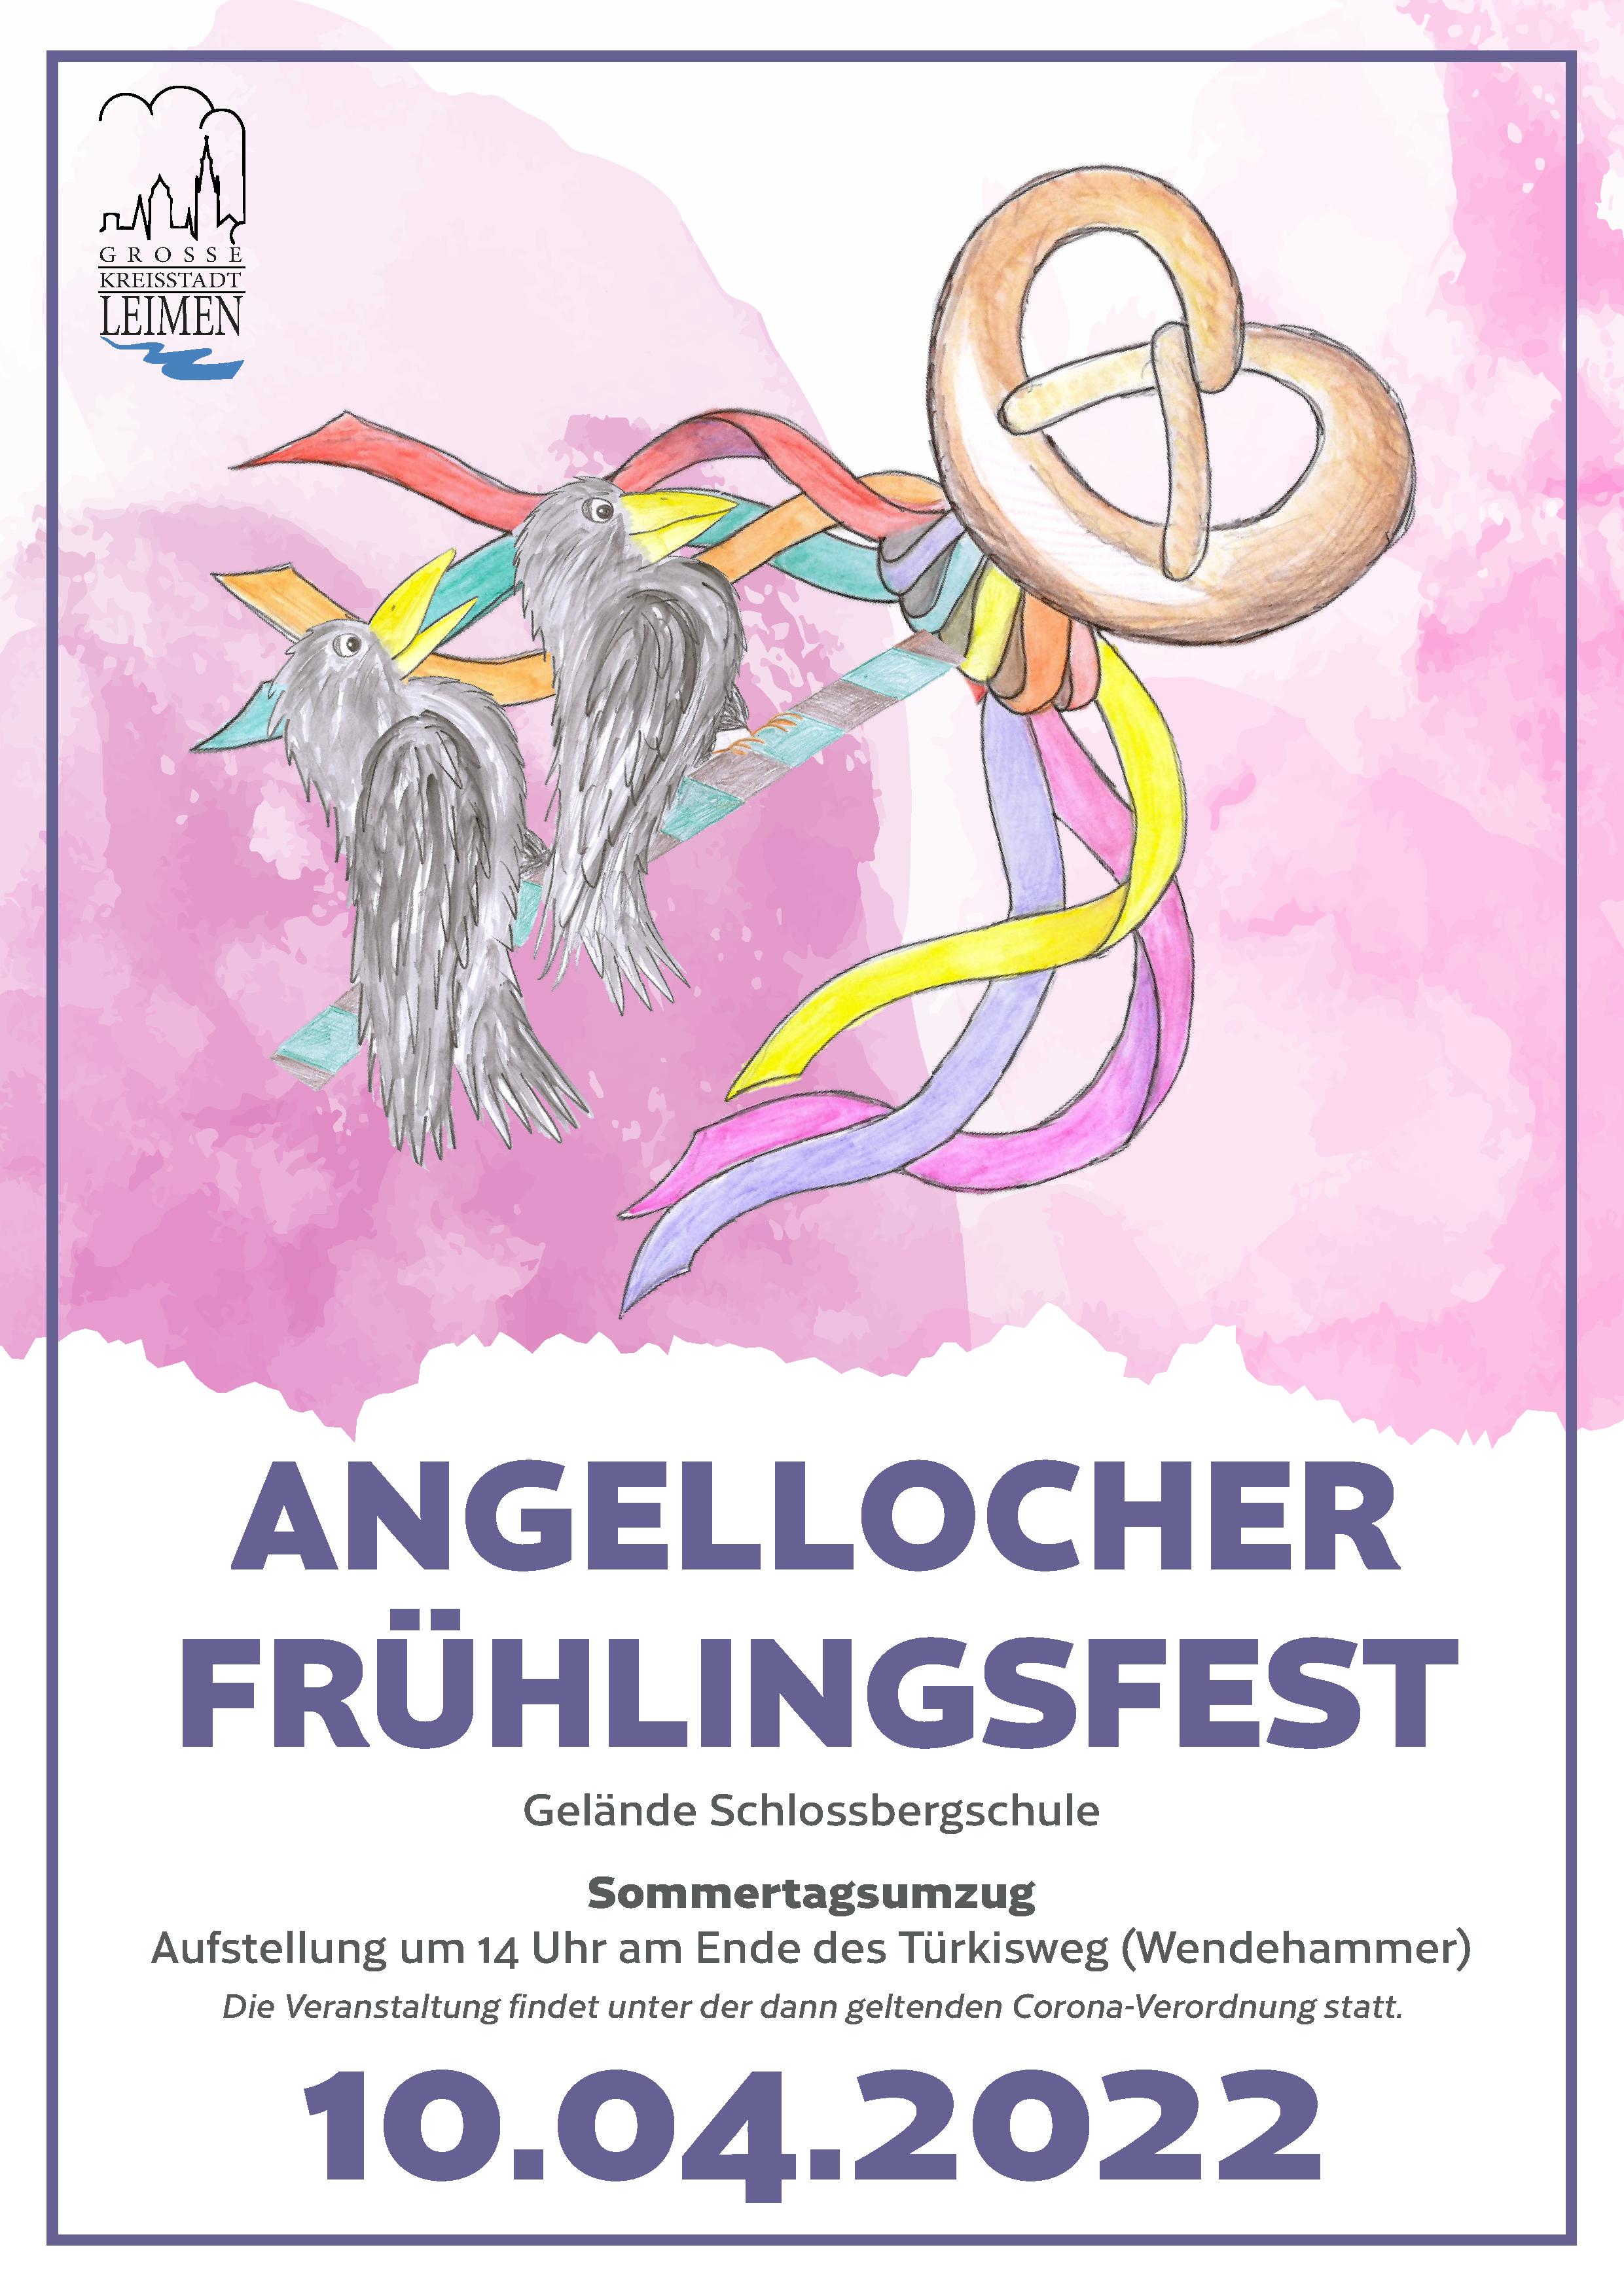  Angellocher Frühlingsfest 2022 